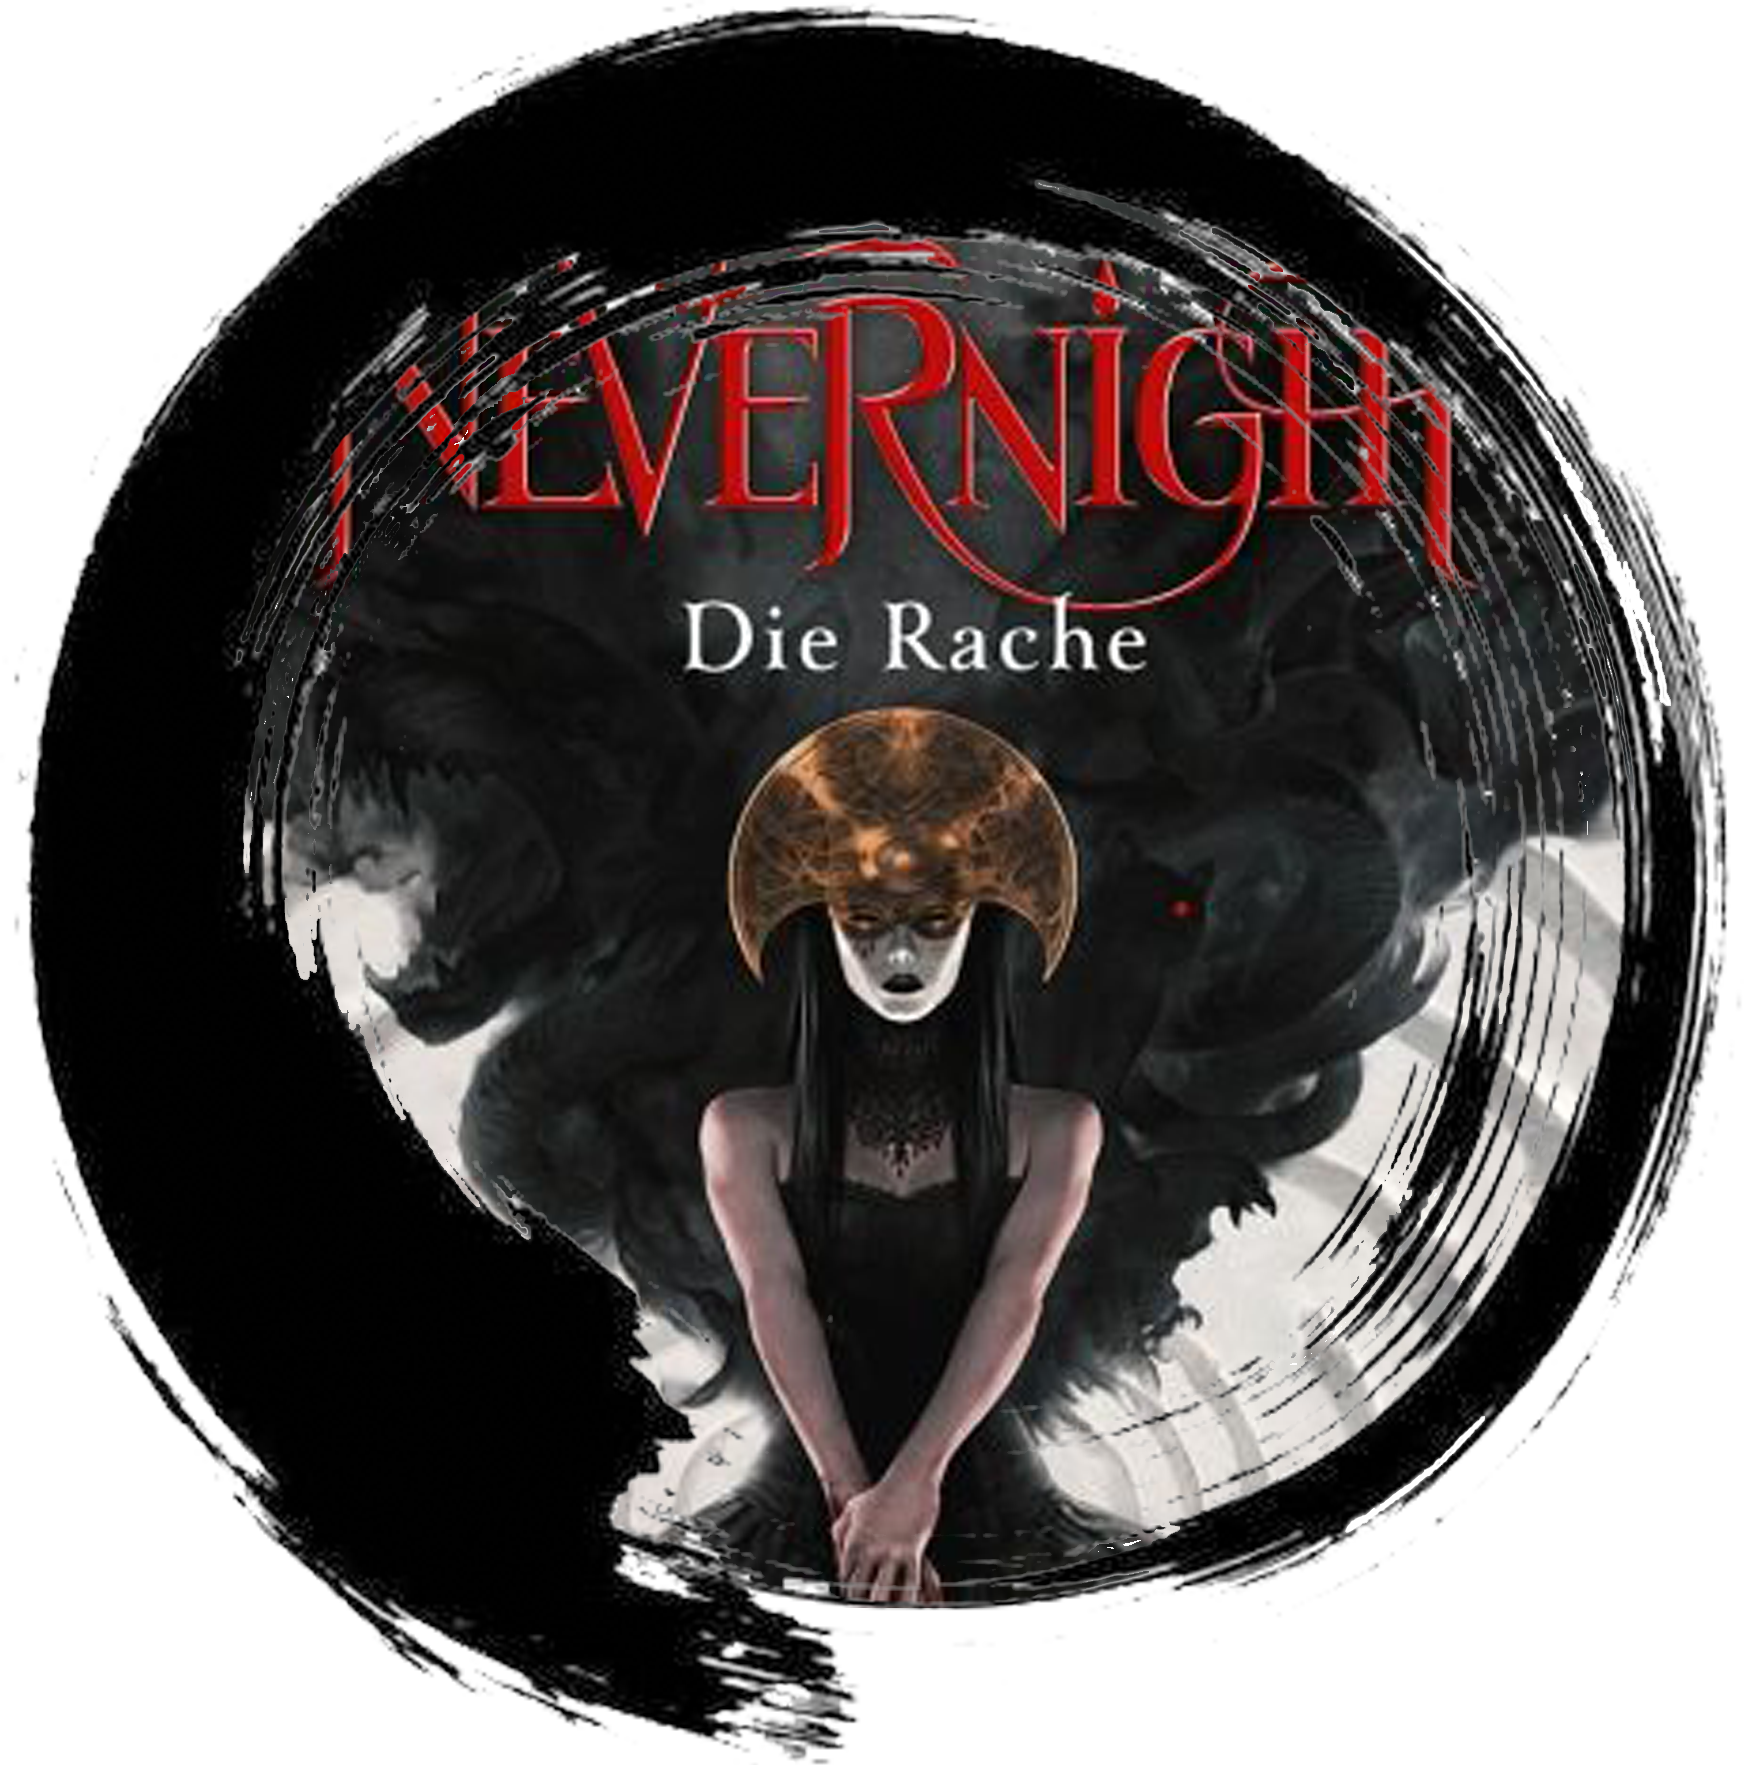 Nevernight #3 – Die Rache